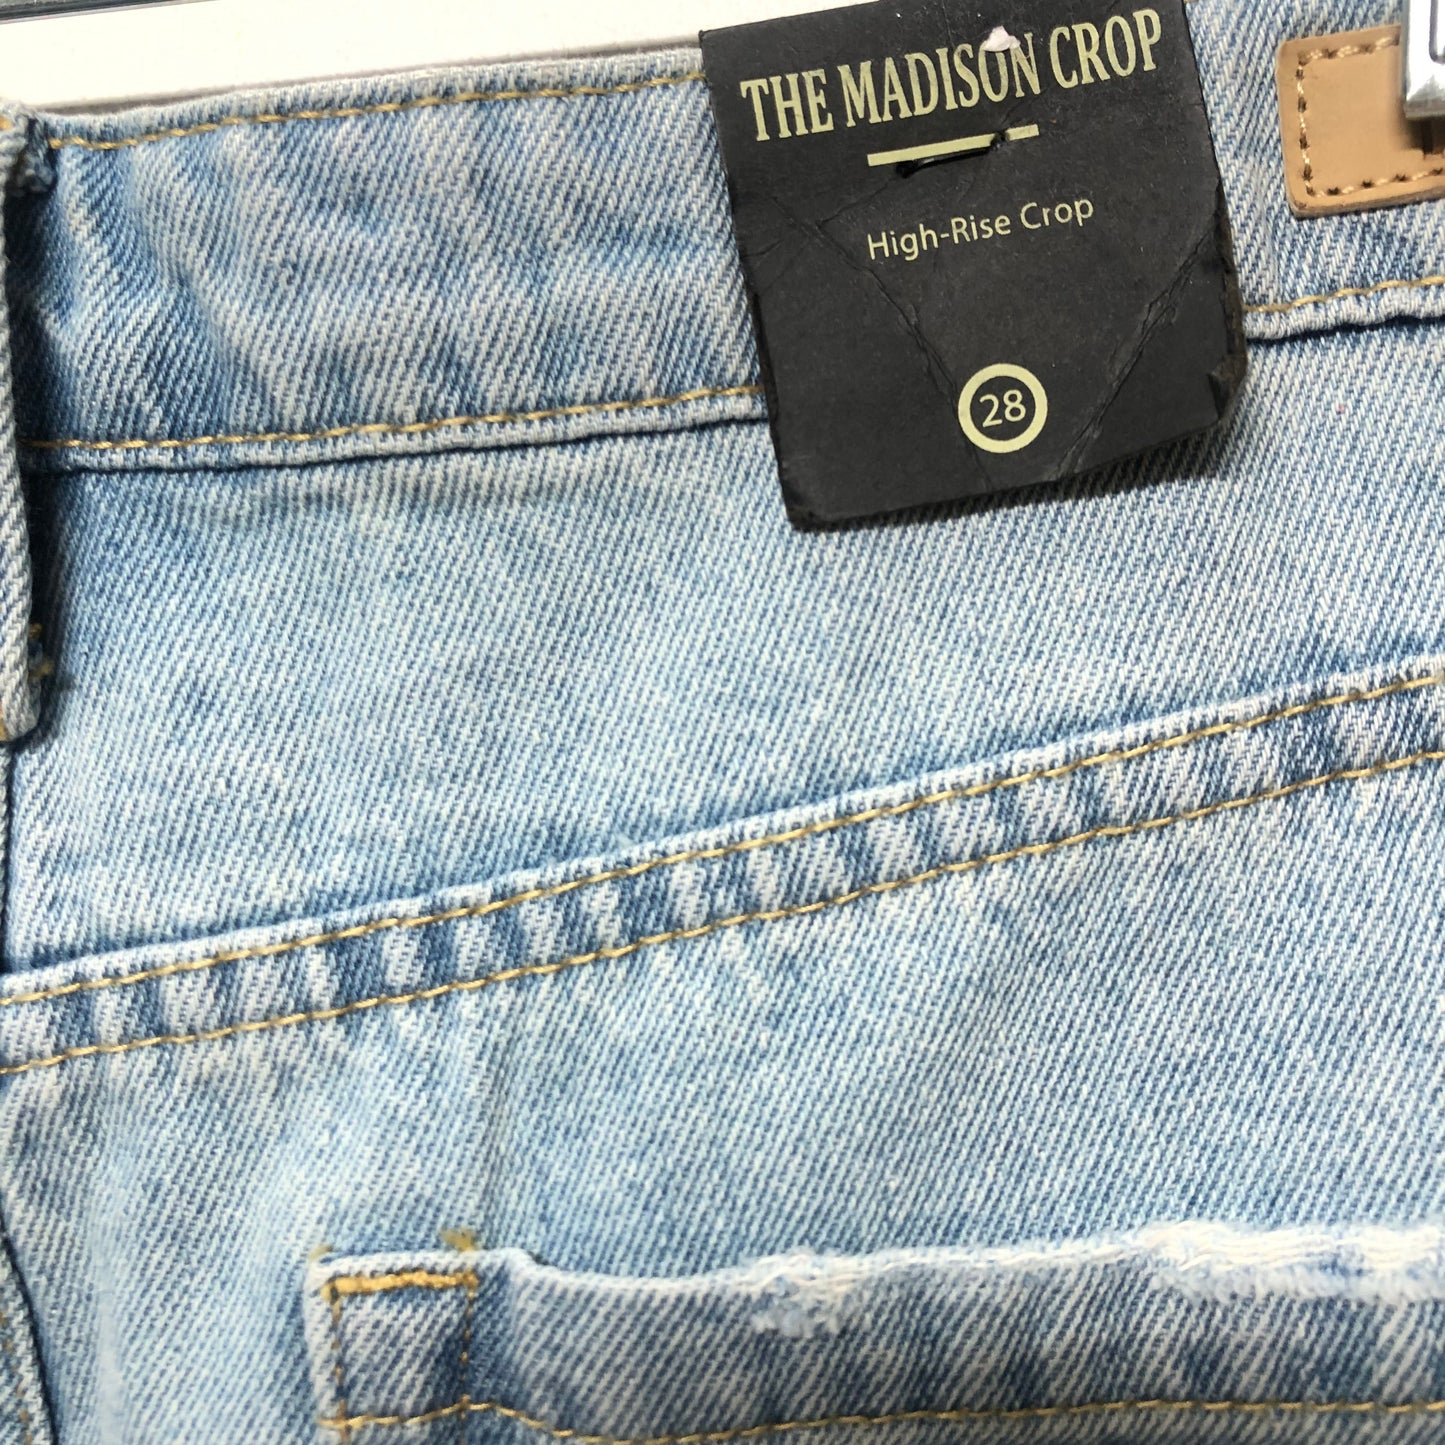 Jeans Cropped By Blanknyc  Size: 6